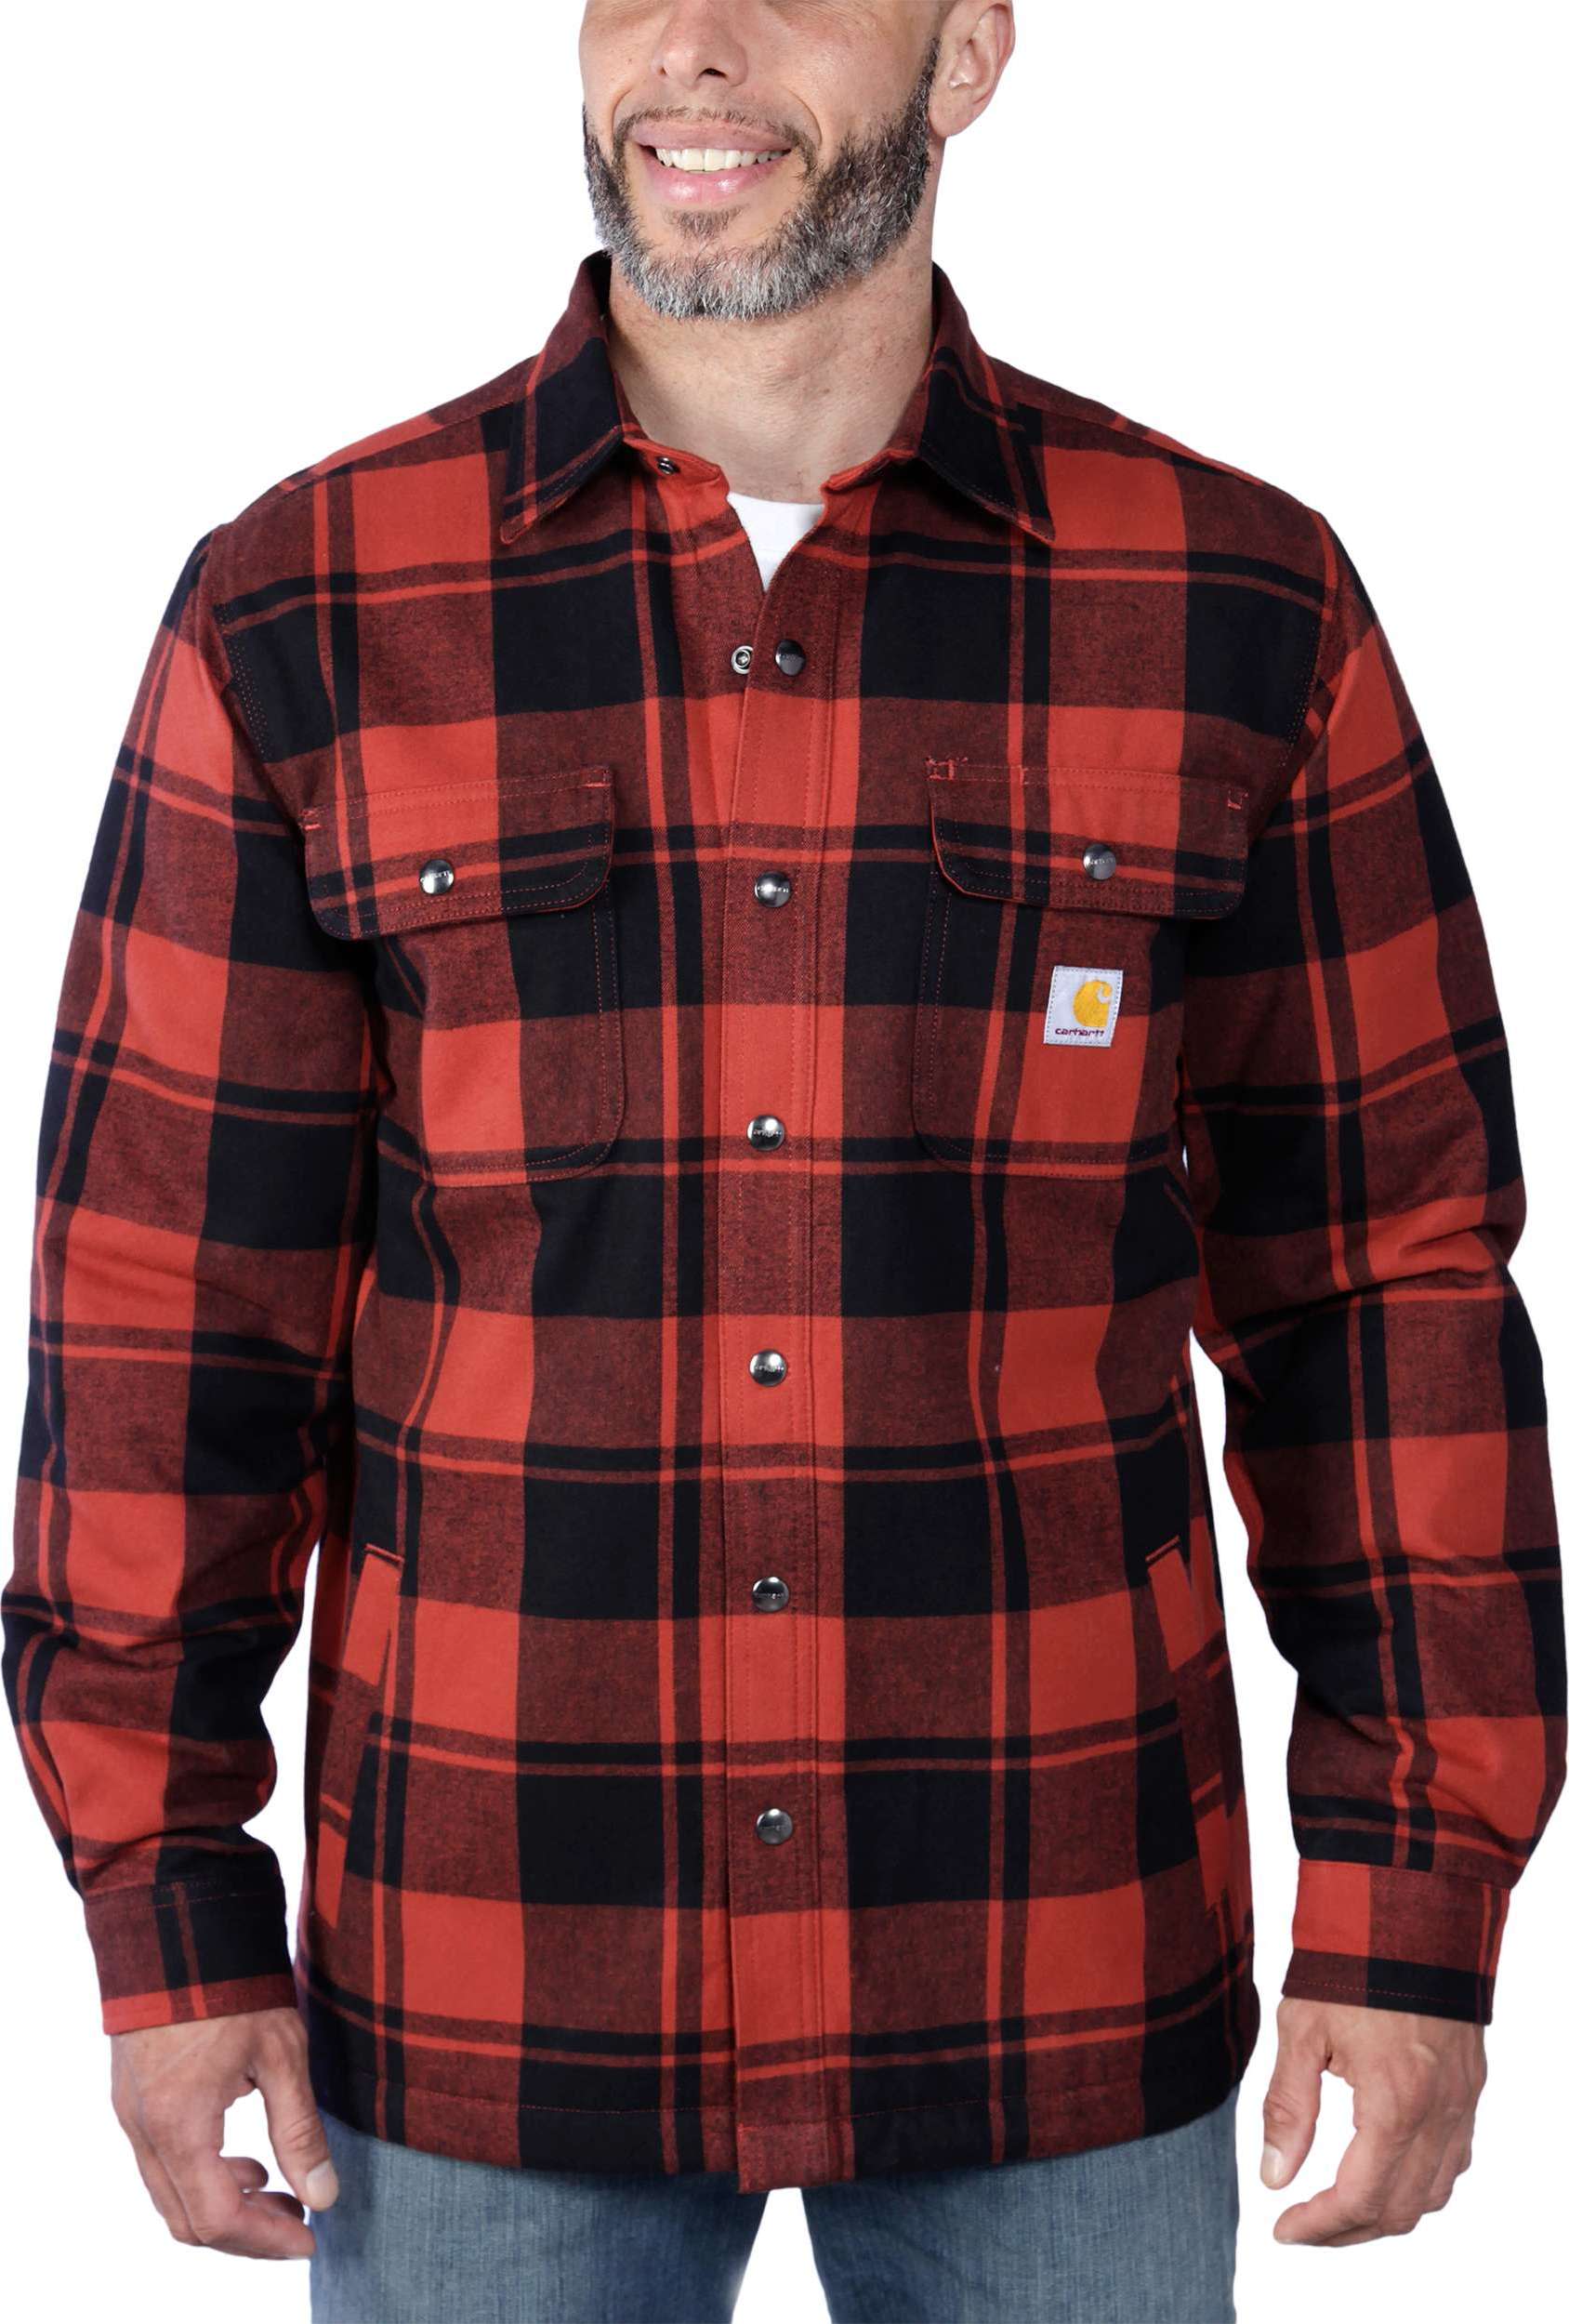 Carhartt Men's Flannel Sherpa Lined Shirt Jacket Red Ochre M, Red Ochre